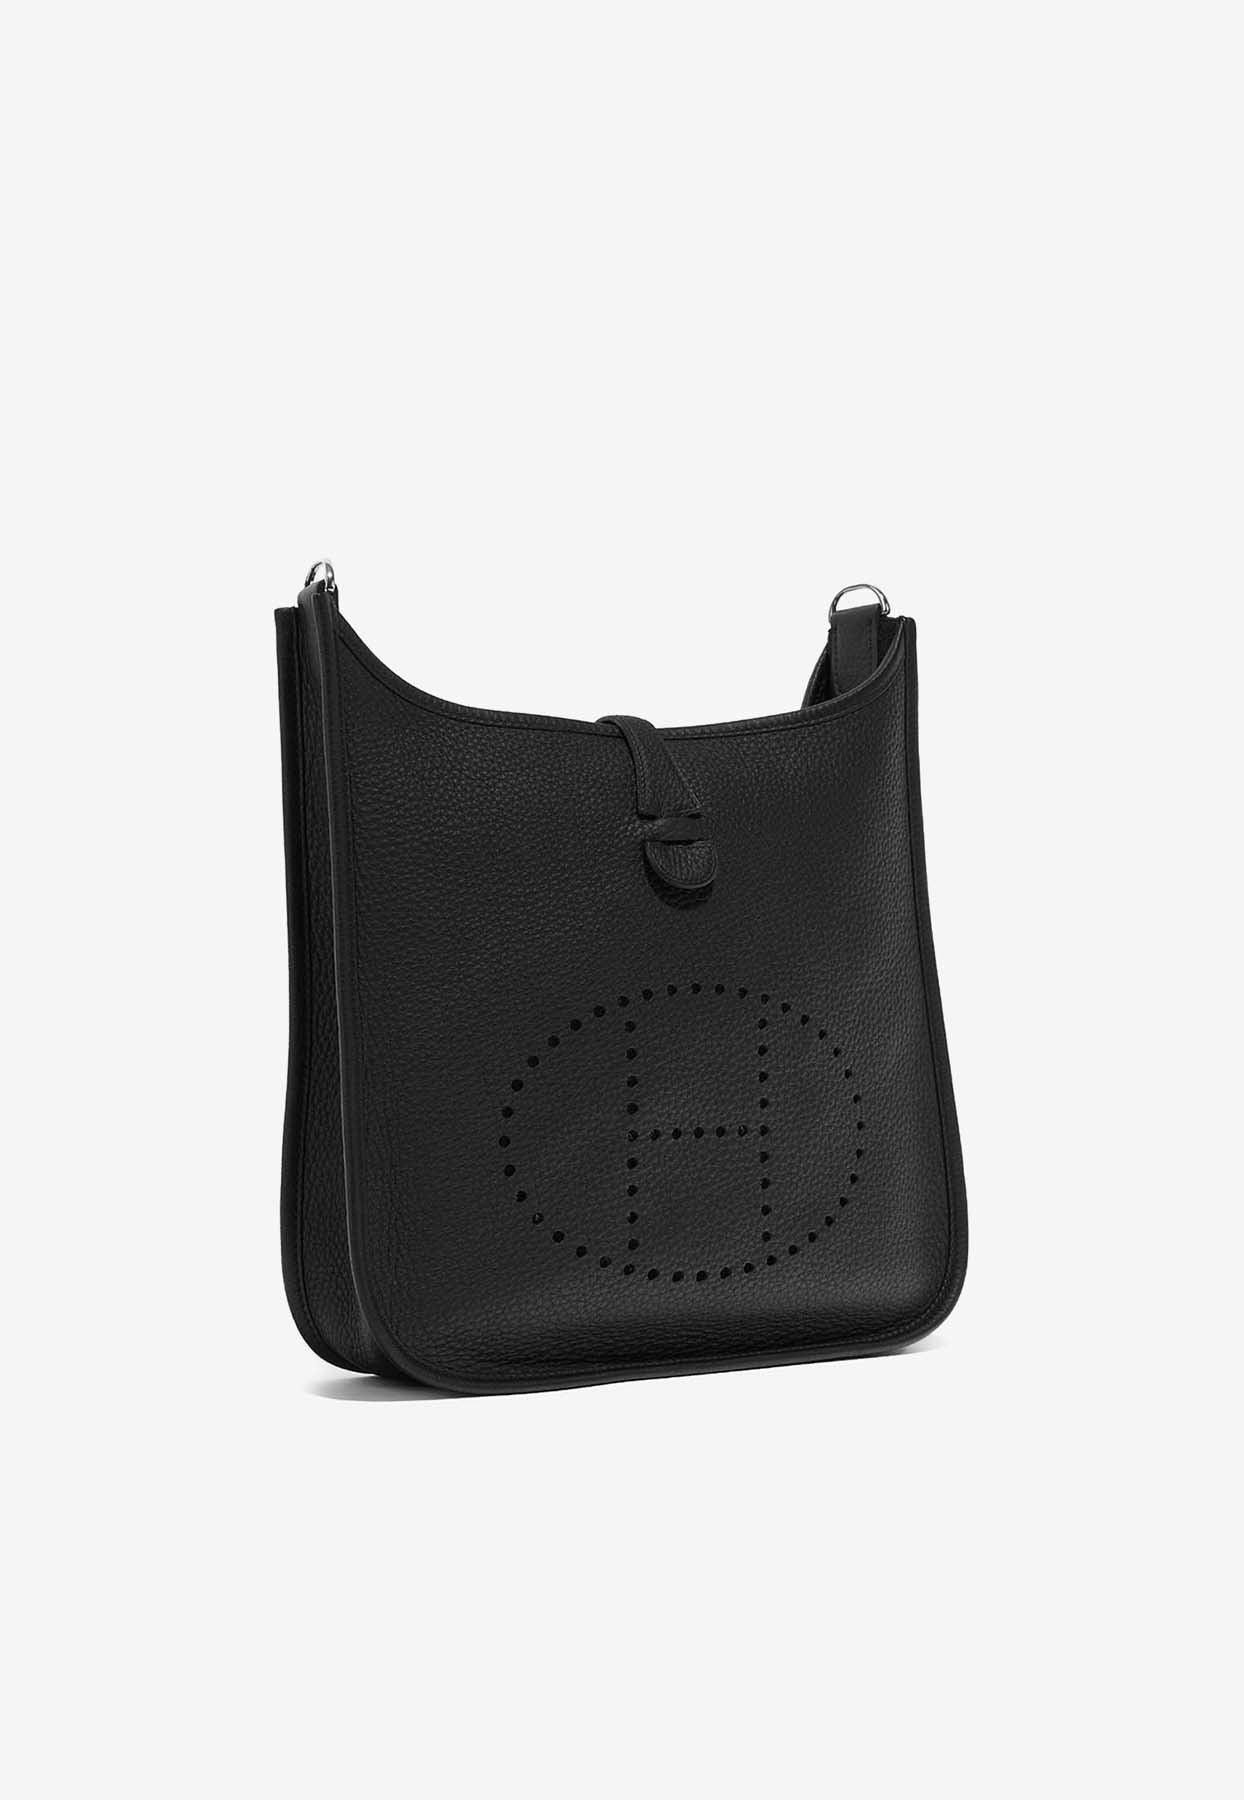 Hermès Evelyne Iii 29 In Black e Leather With Palladium Hardware